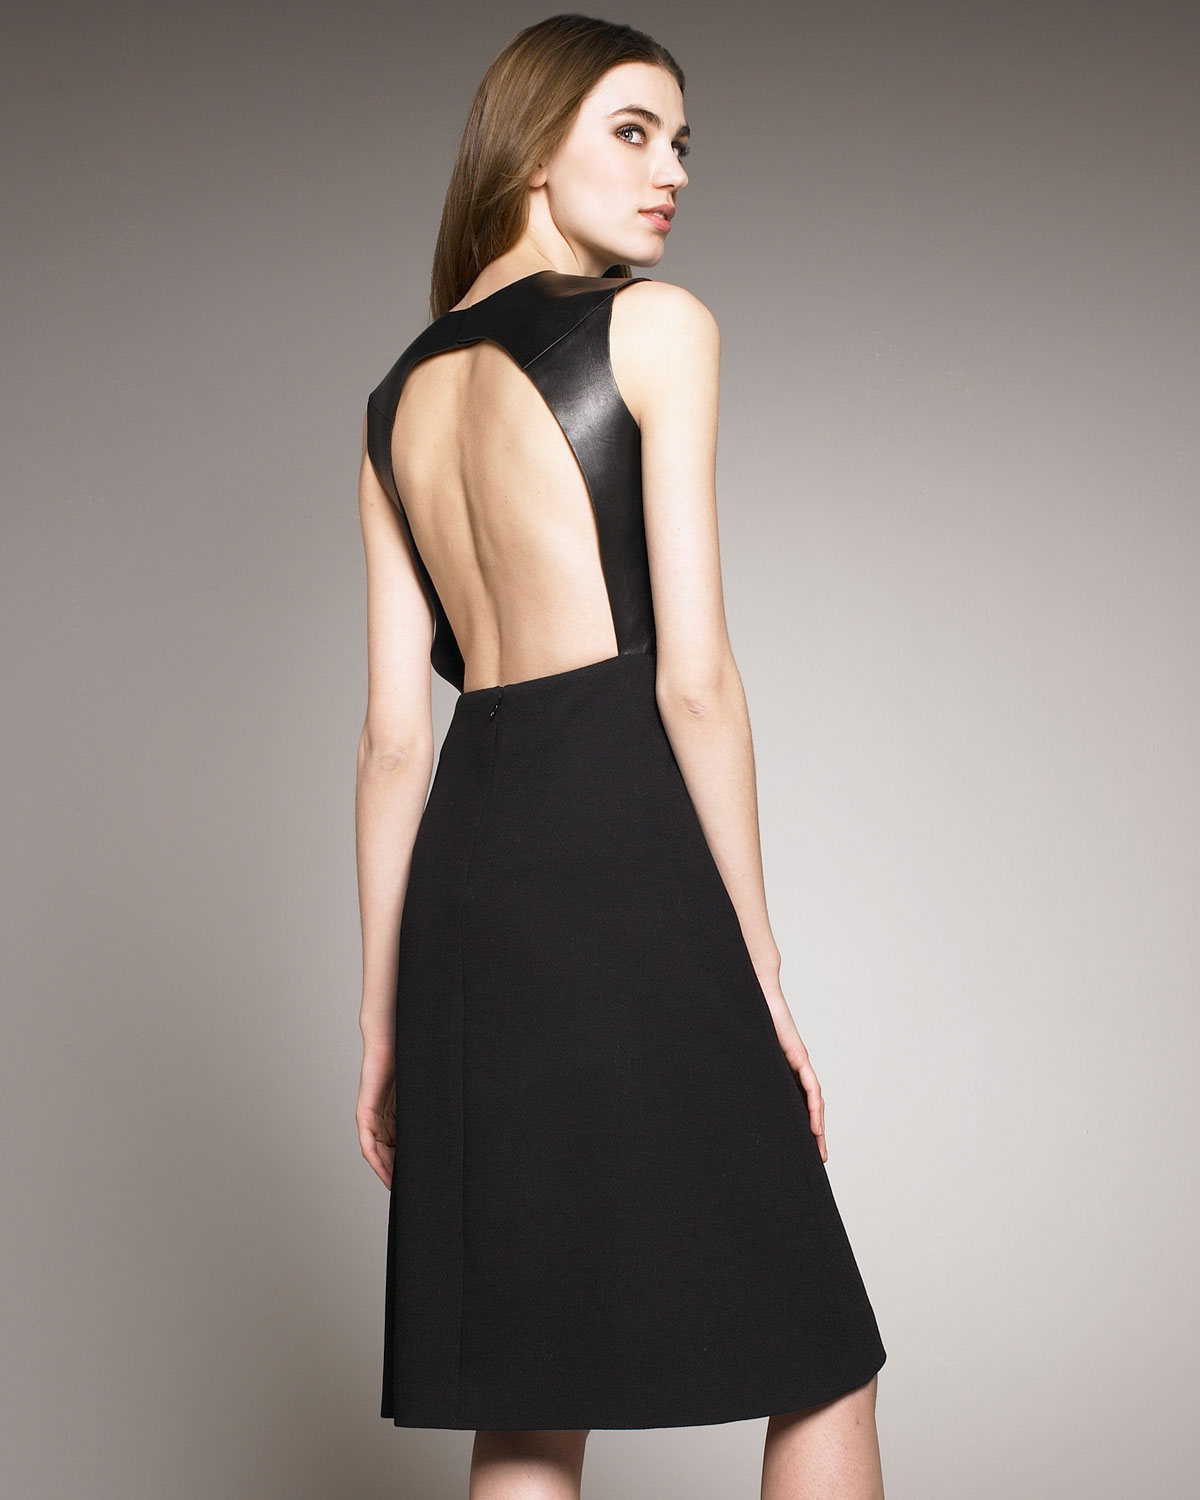 Chloé Cutout Leather-bodice Dress in Black - Lyst